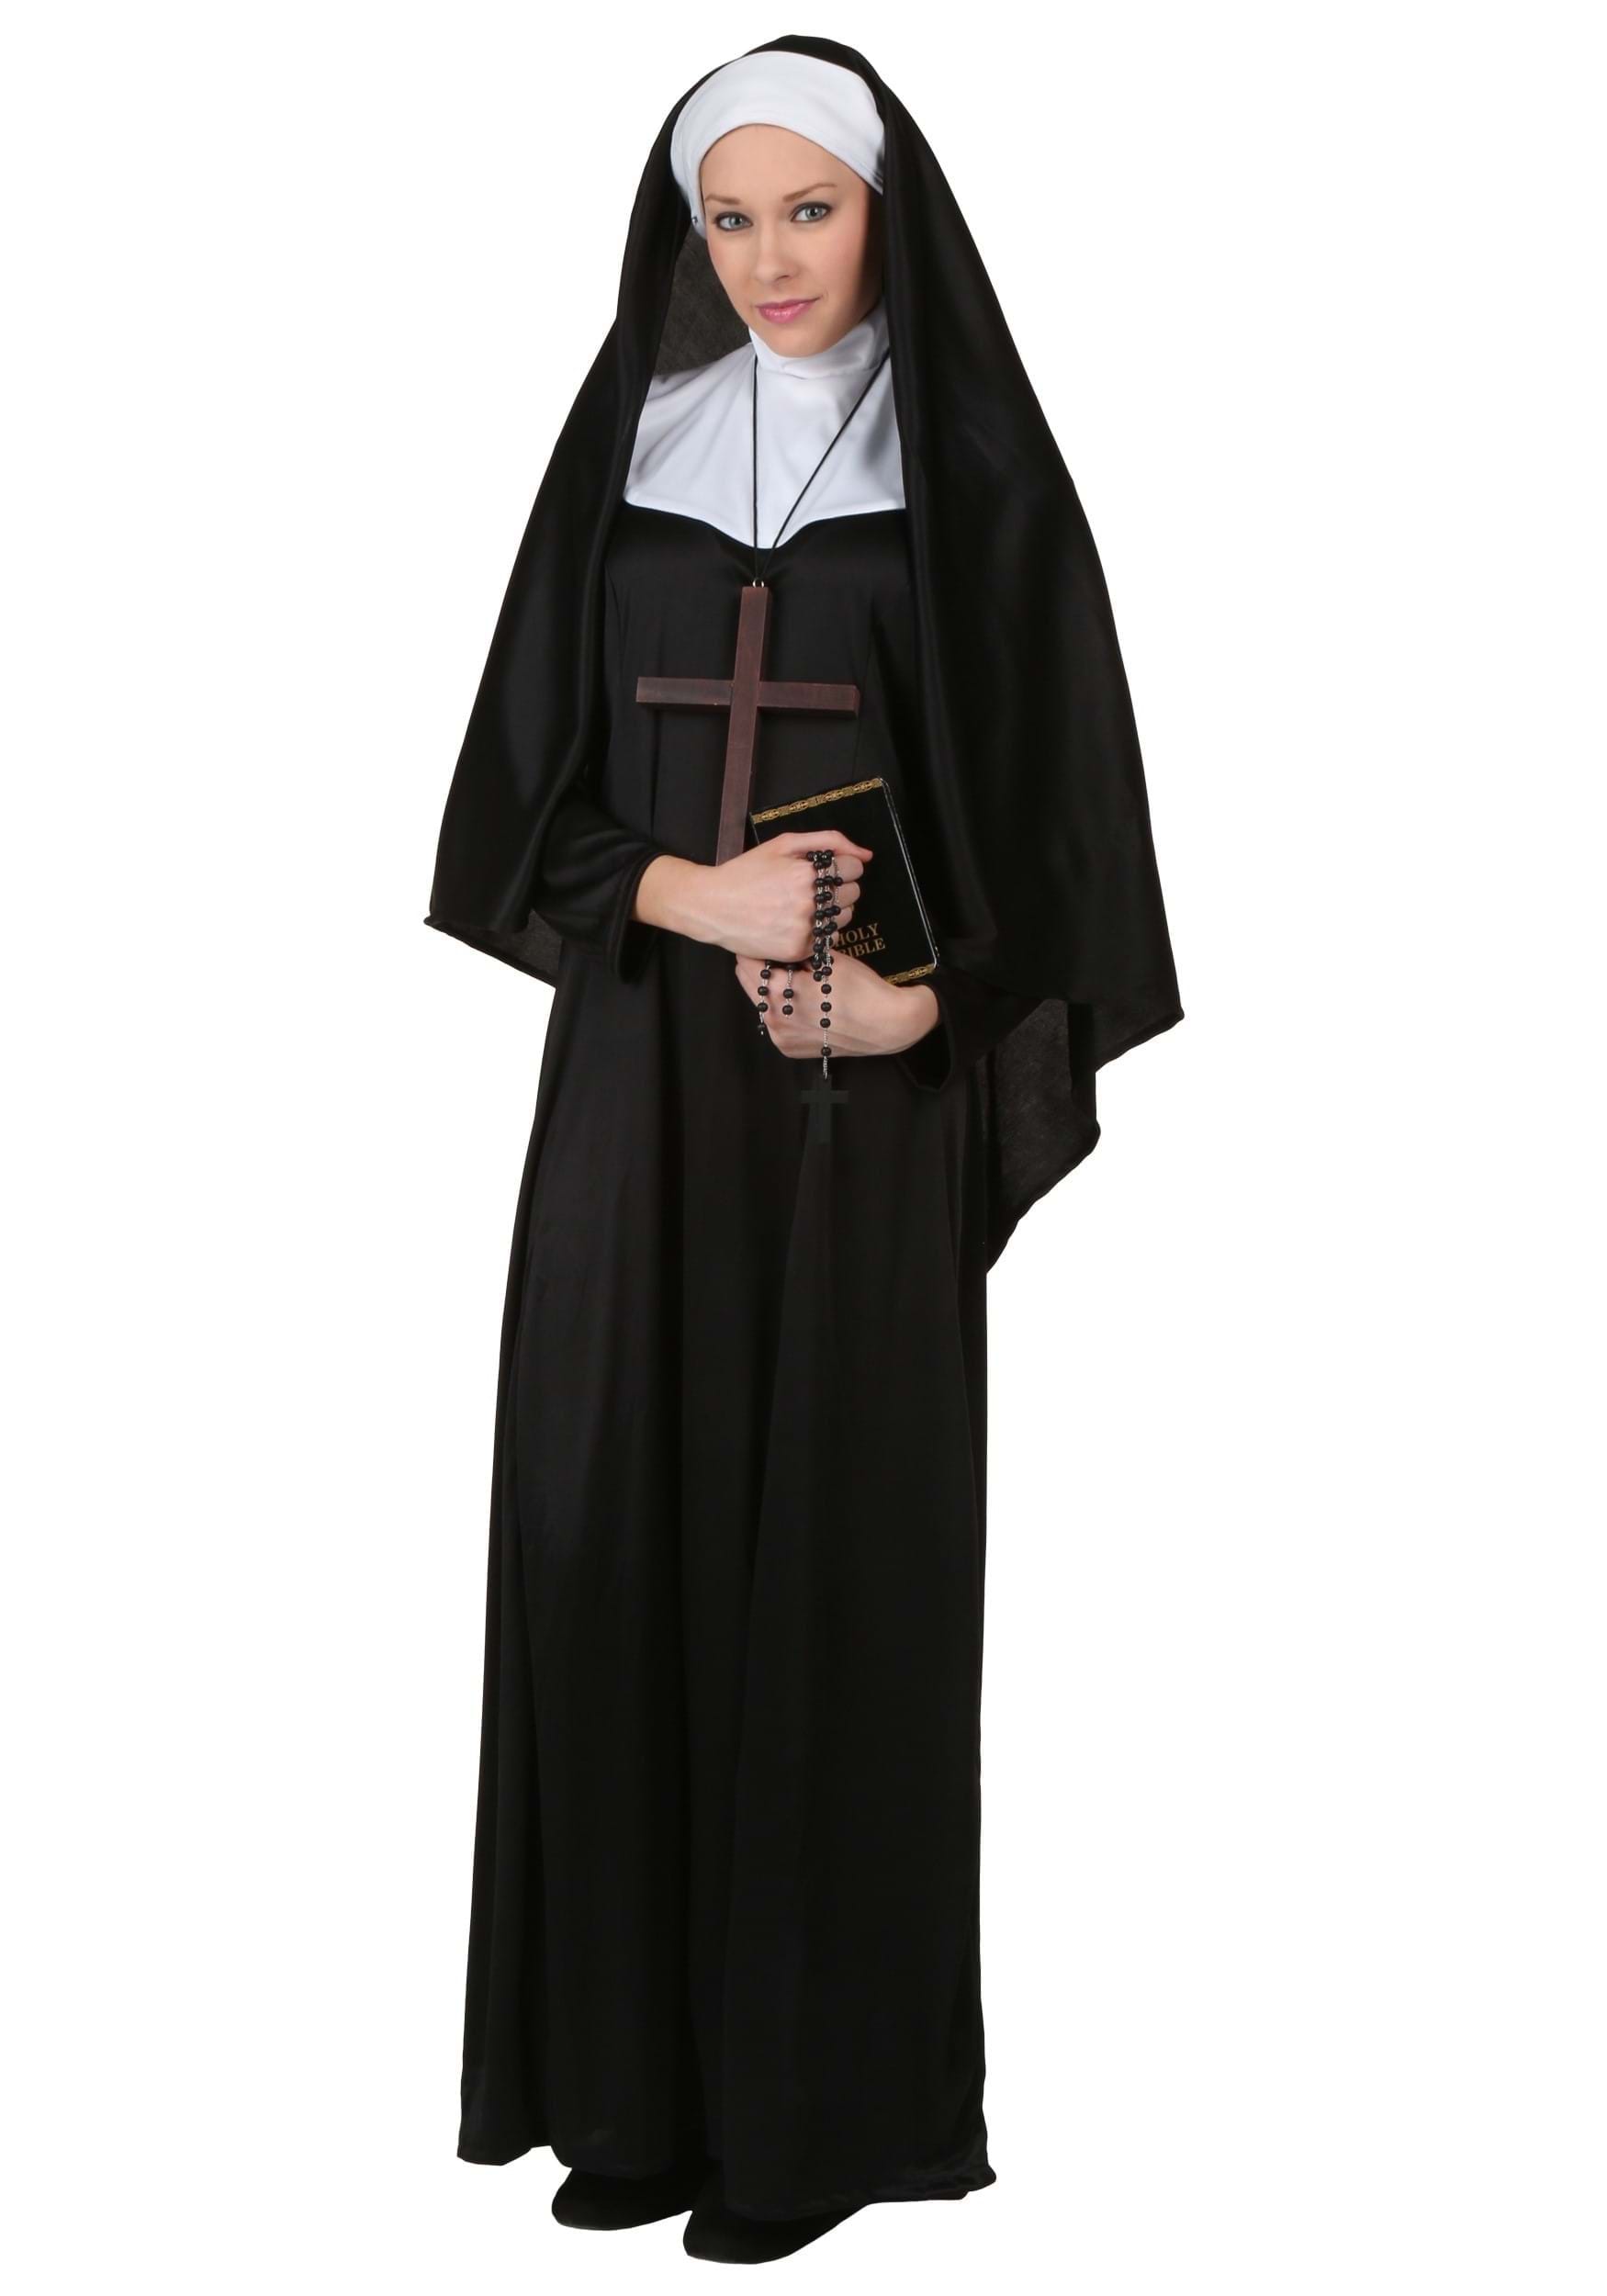 Photos - Fancy Dress FUN Costumes Traditional Adult Nun Costume Black/White